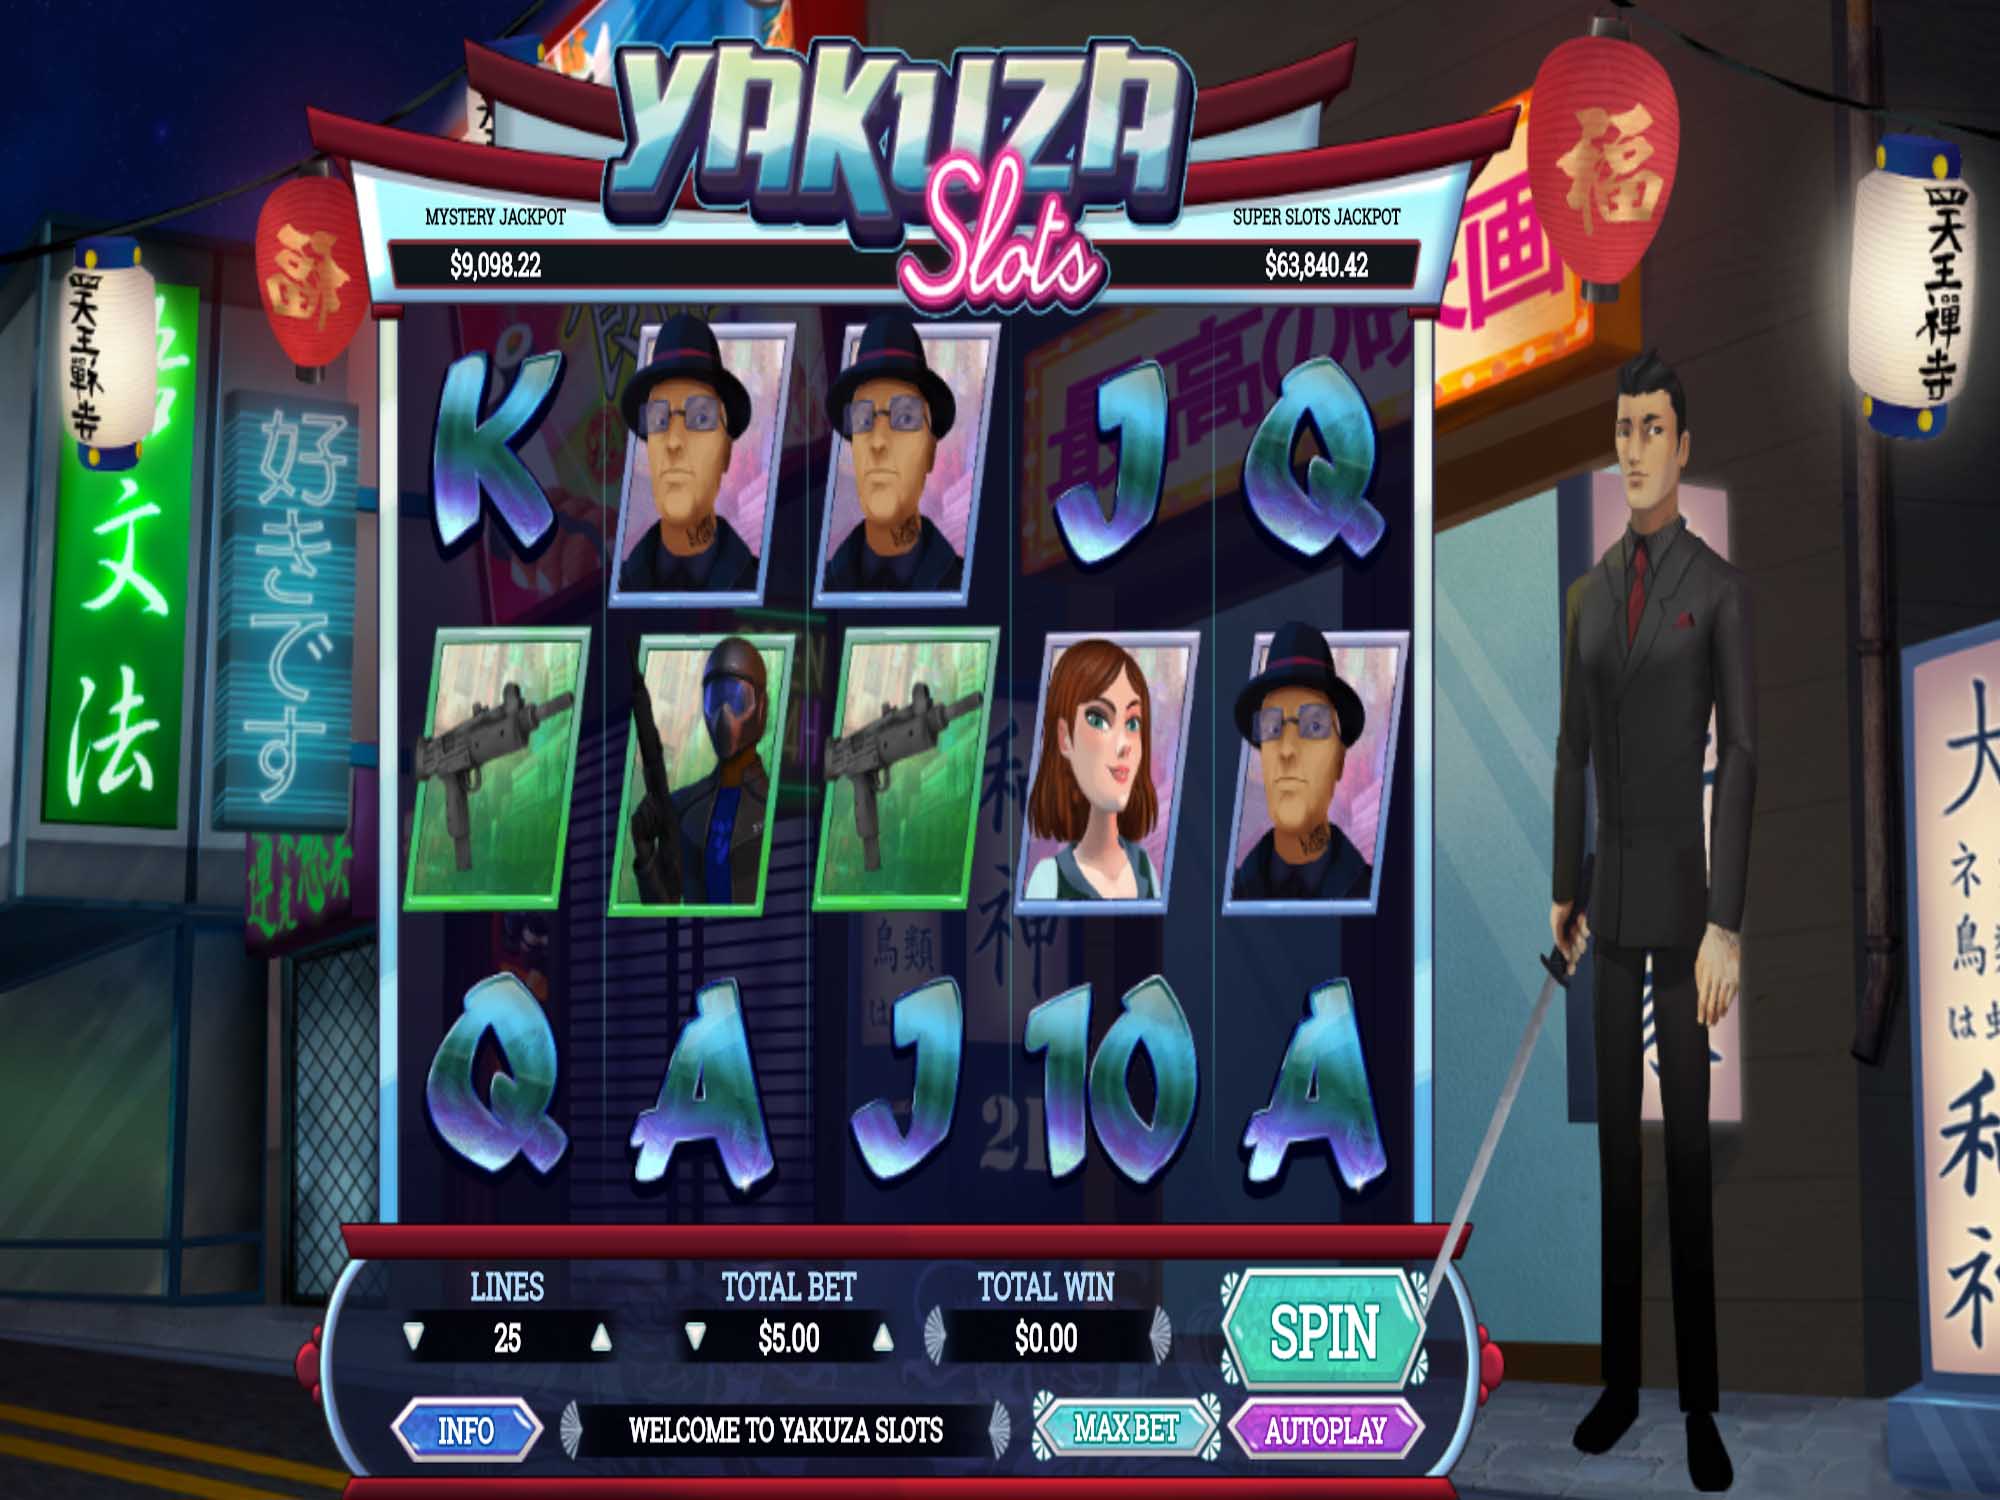 Yakuza video slot game screenshot